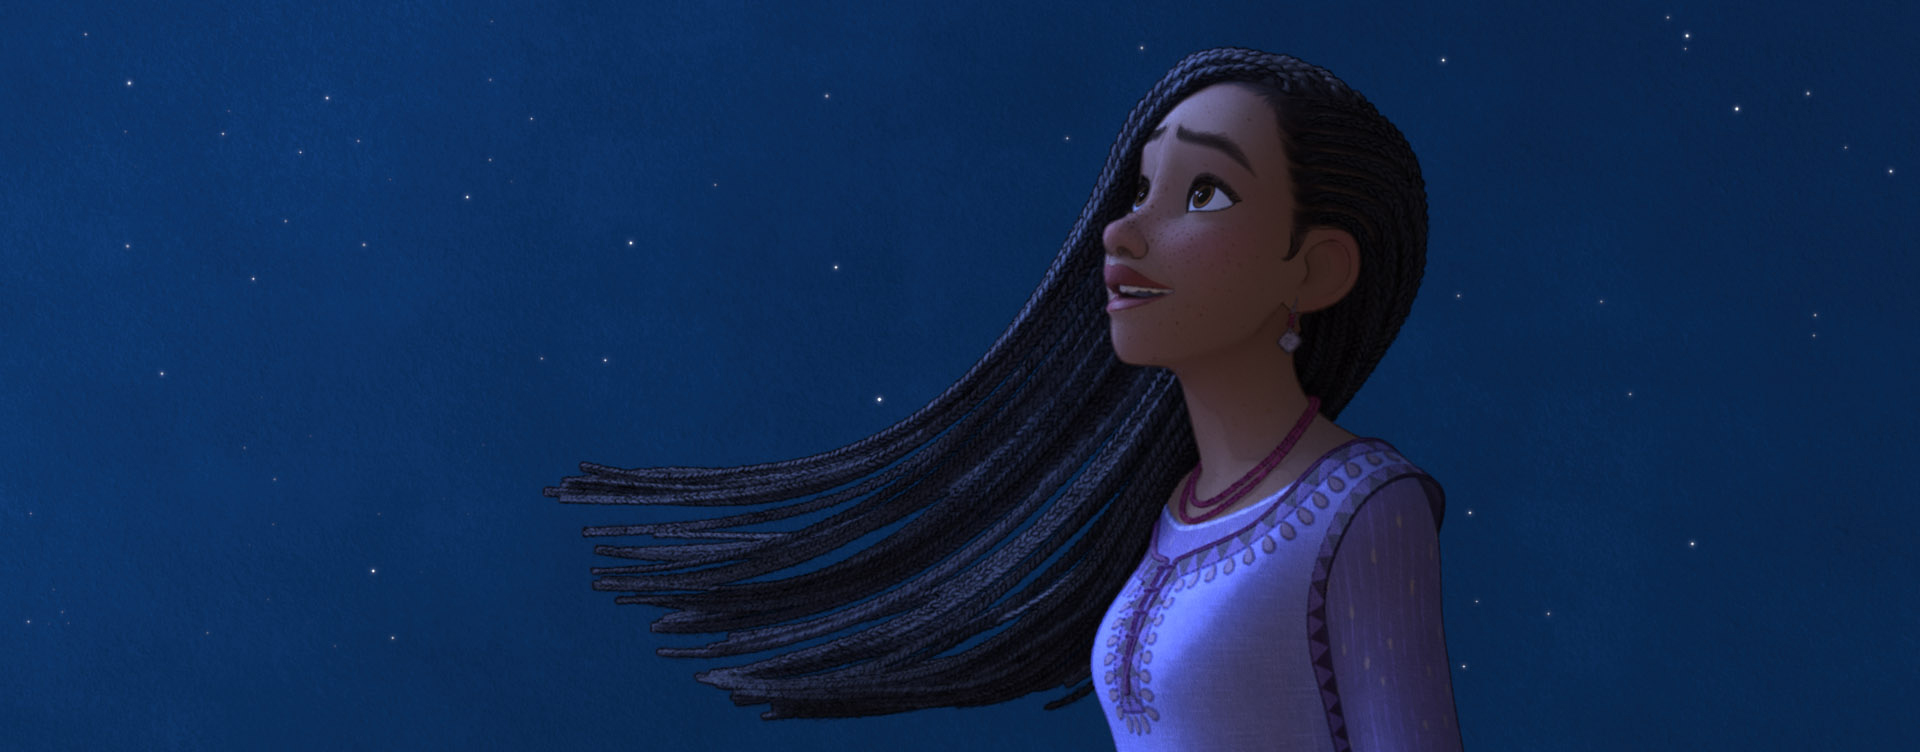 Walt Disney Animation Studios Debuts ‘Wish’ Trailer The Walt Disney